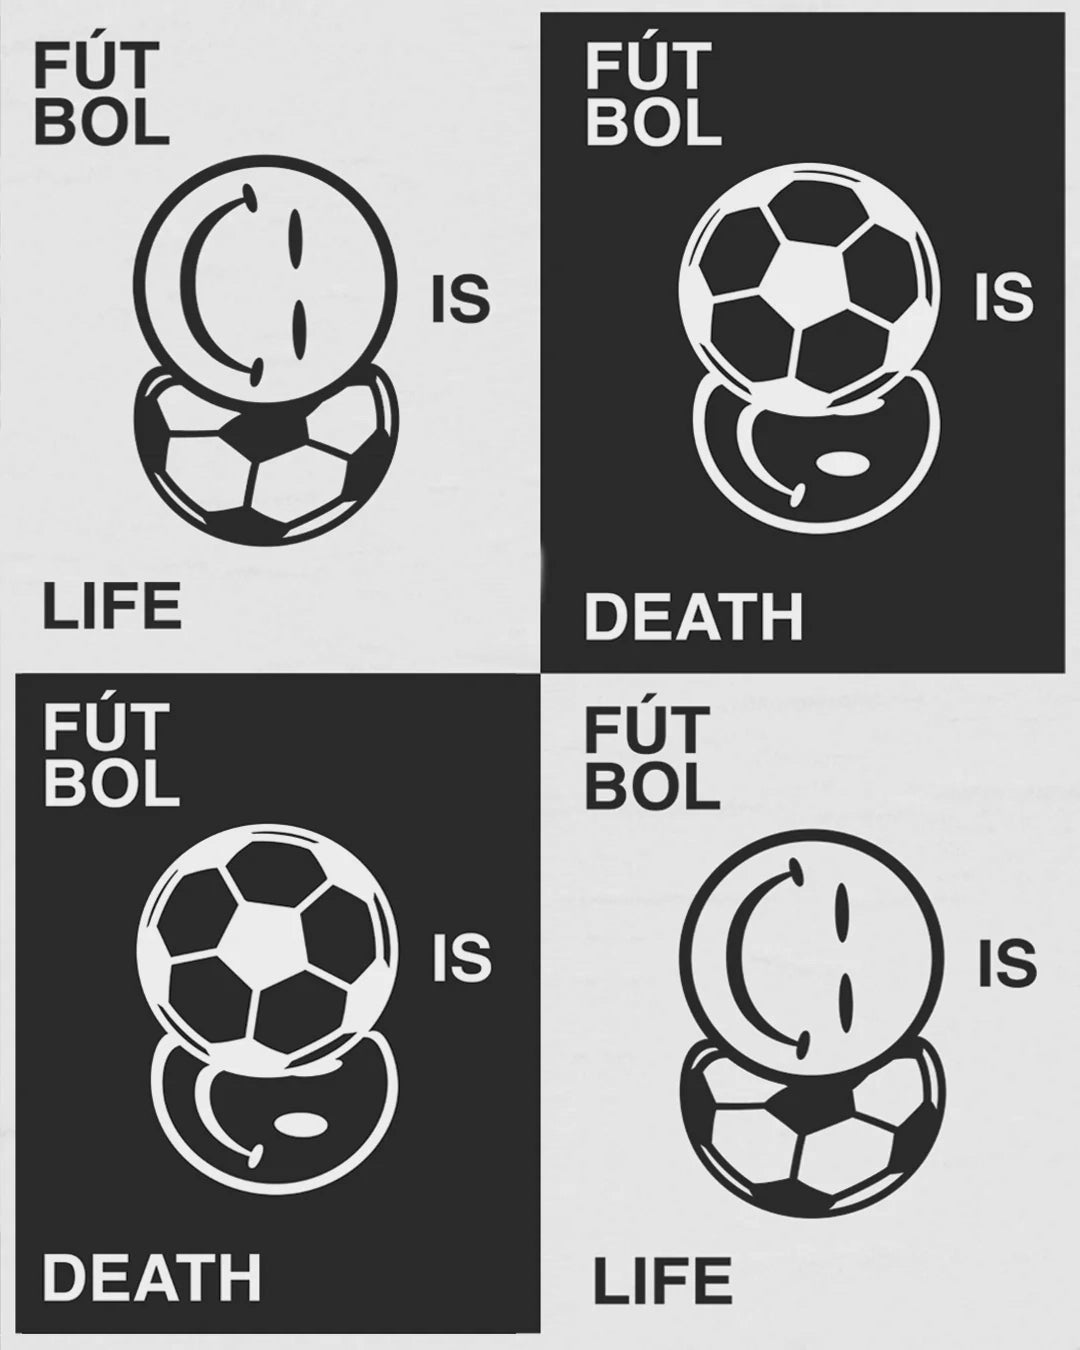 Fútbol is Life